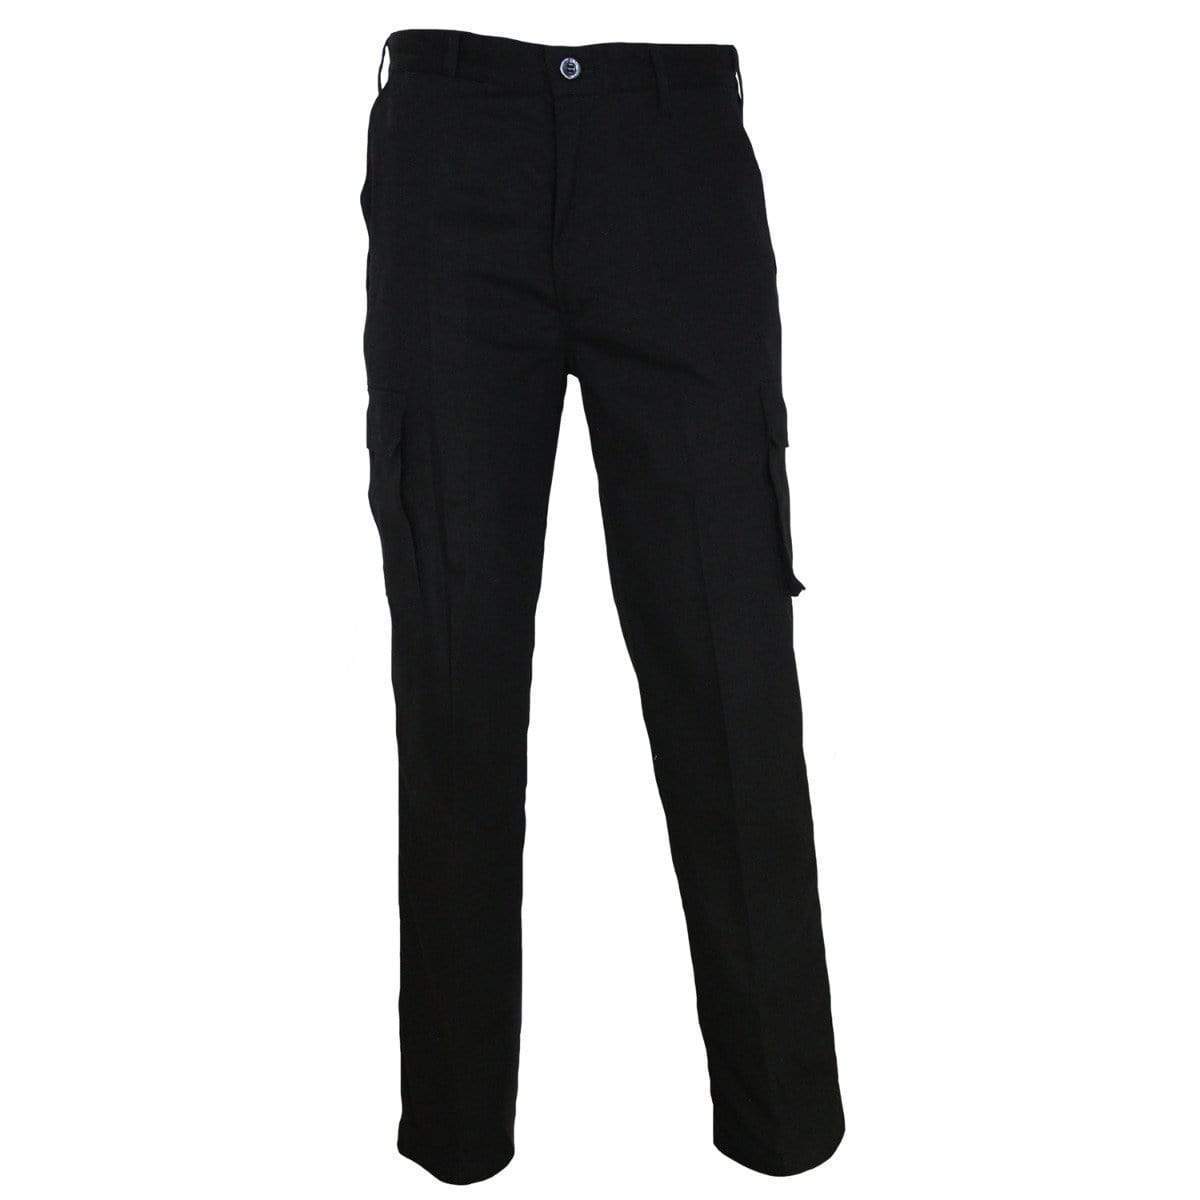 Dnc Workwear Lightweight Cotton Cargo Pants - 3316 Work Wear DNC Workwear Black 72R 